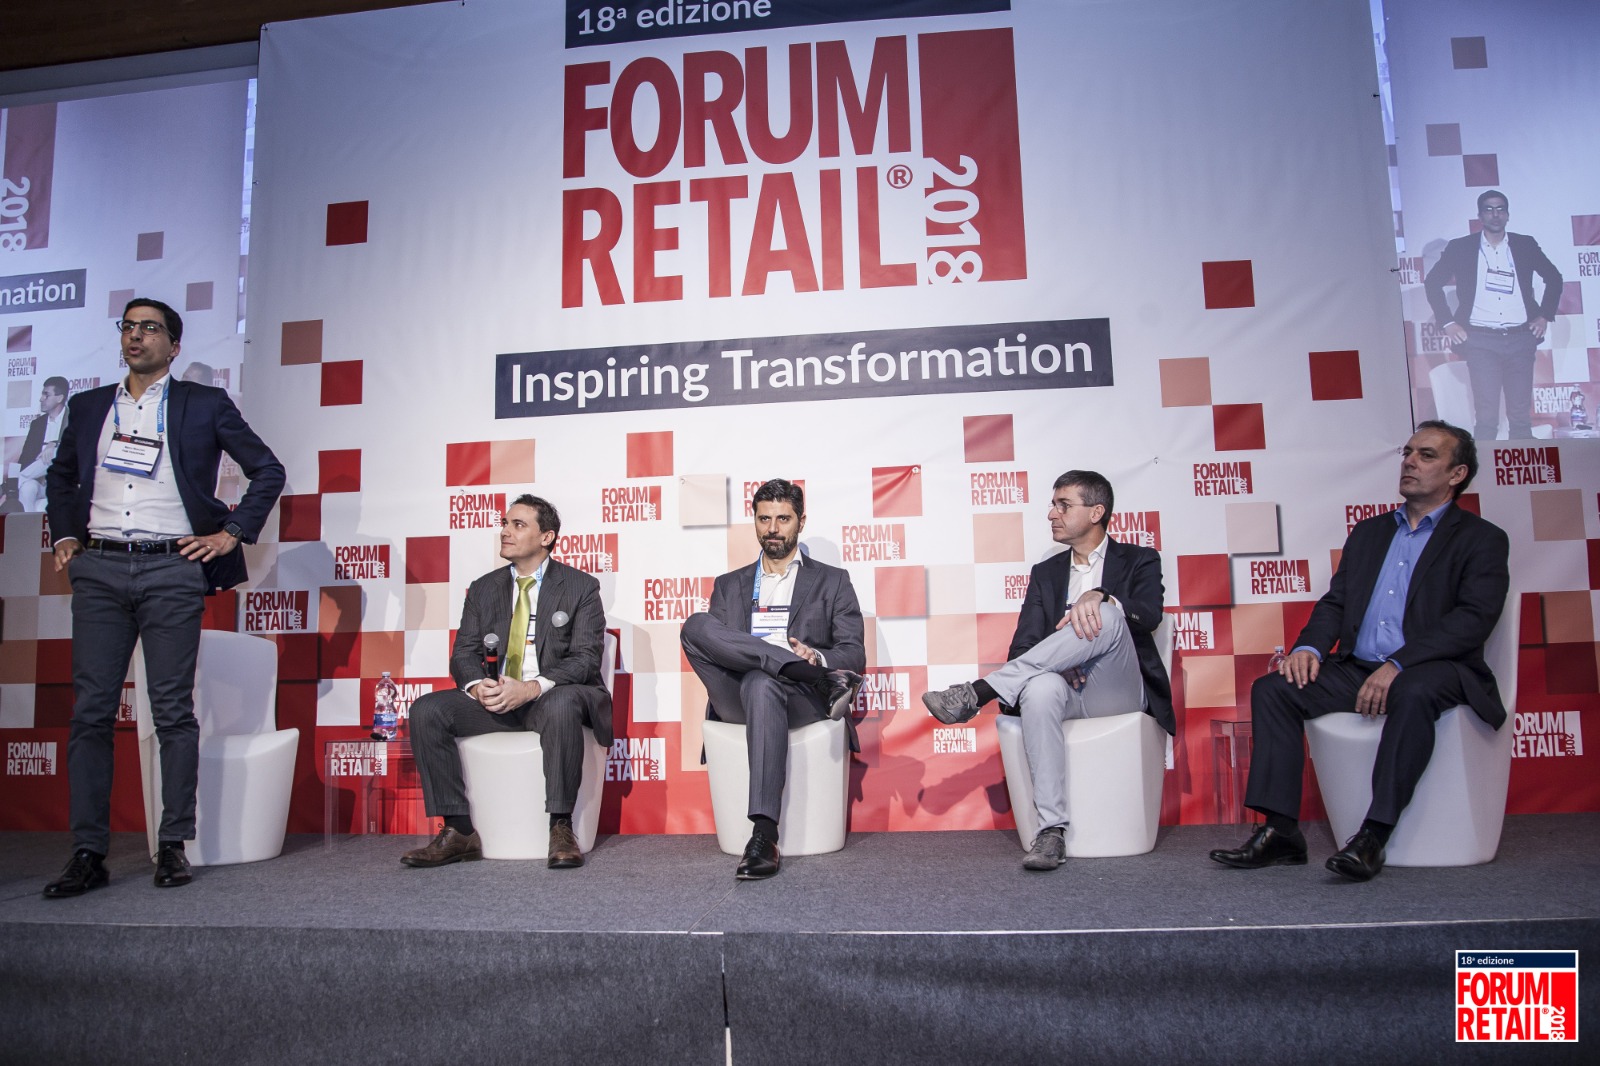 Forum Retail 2020